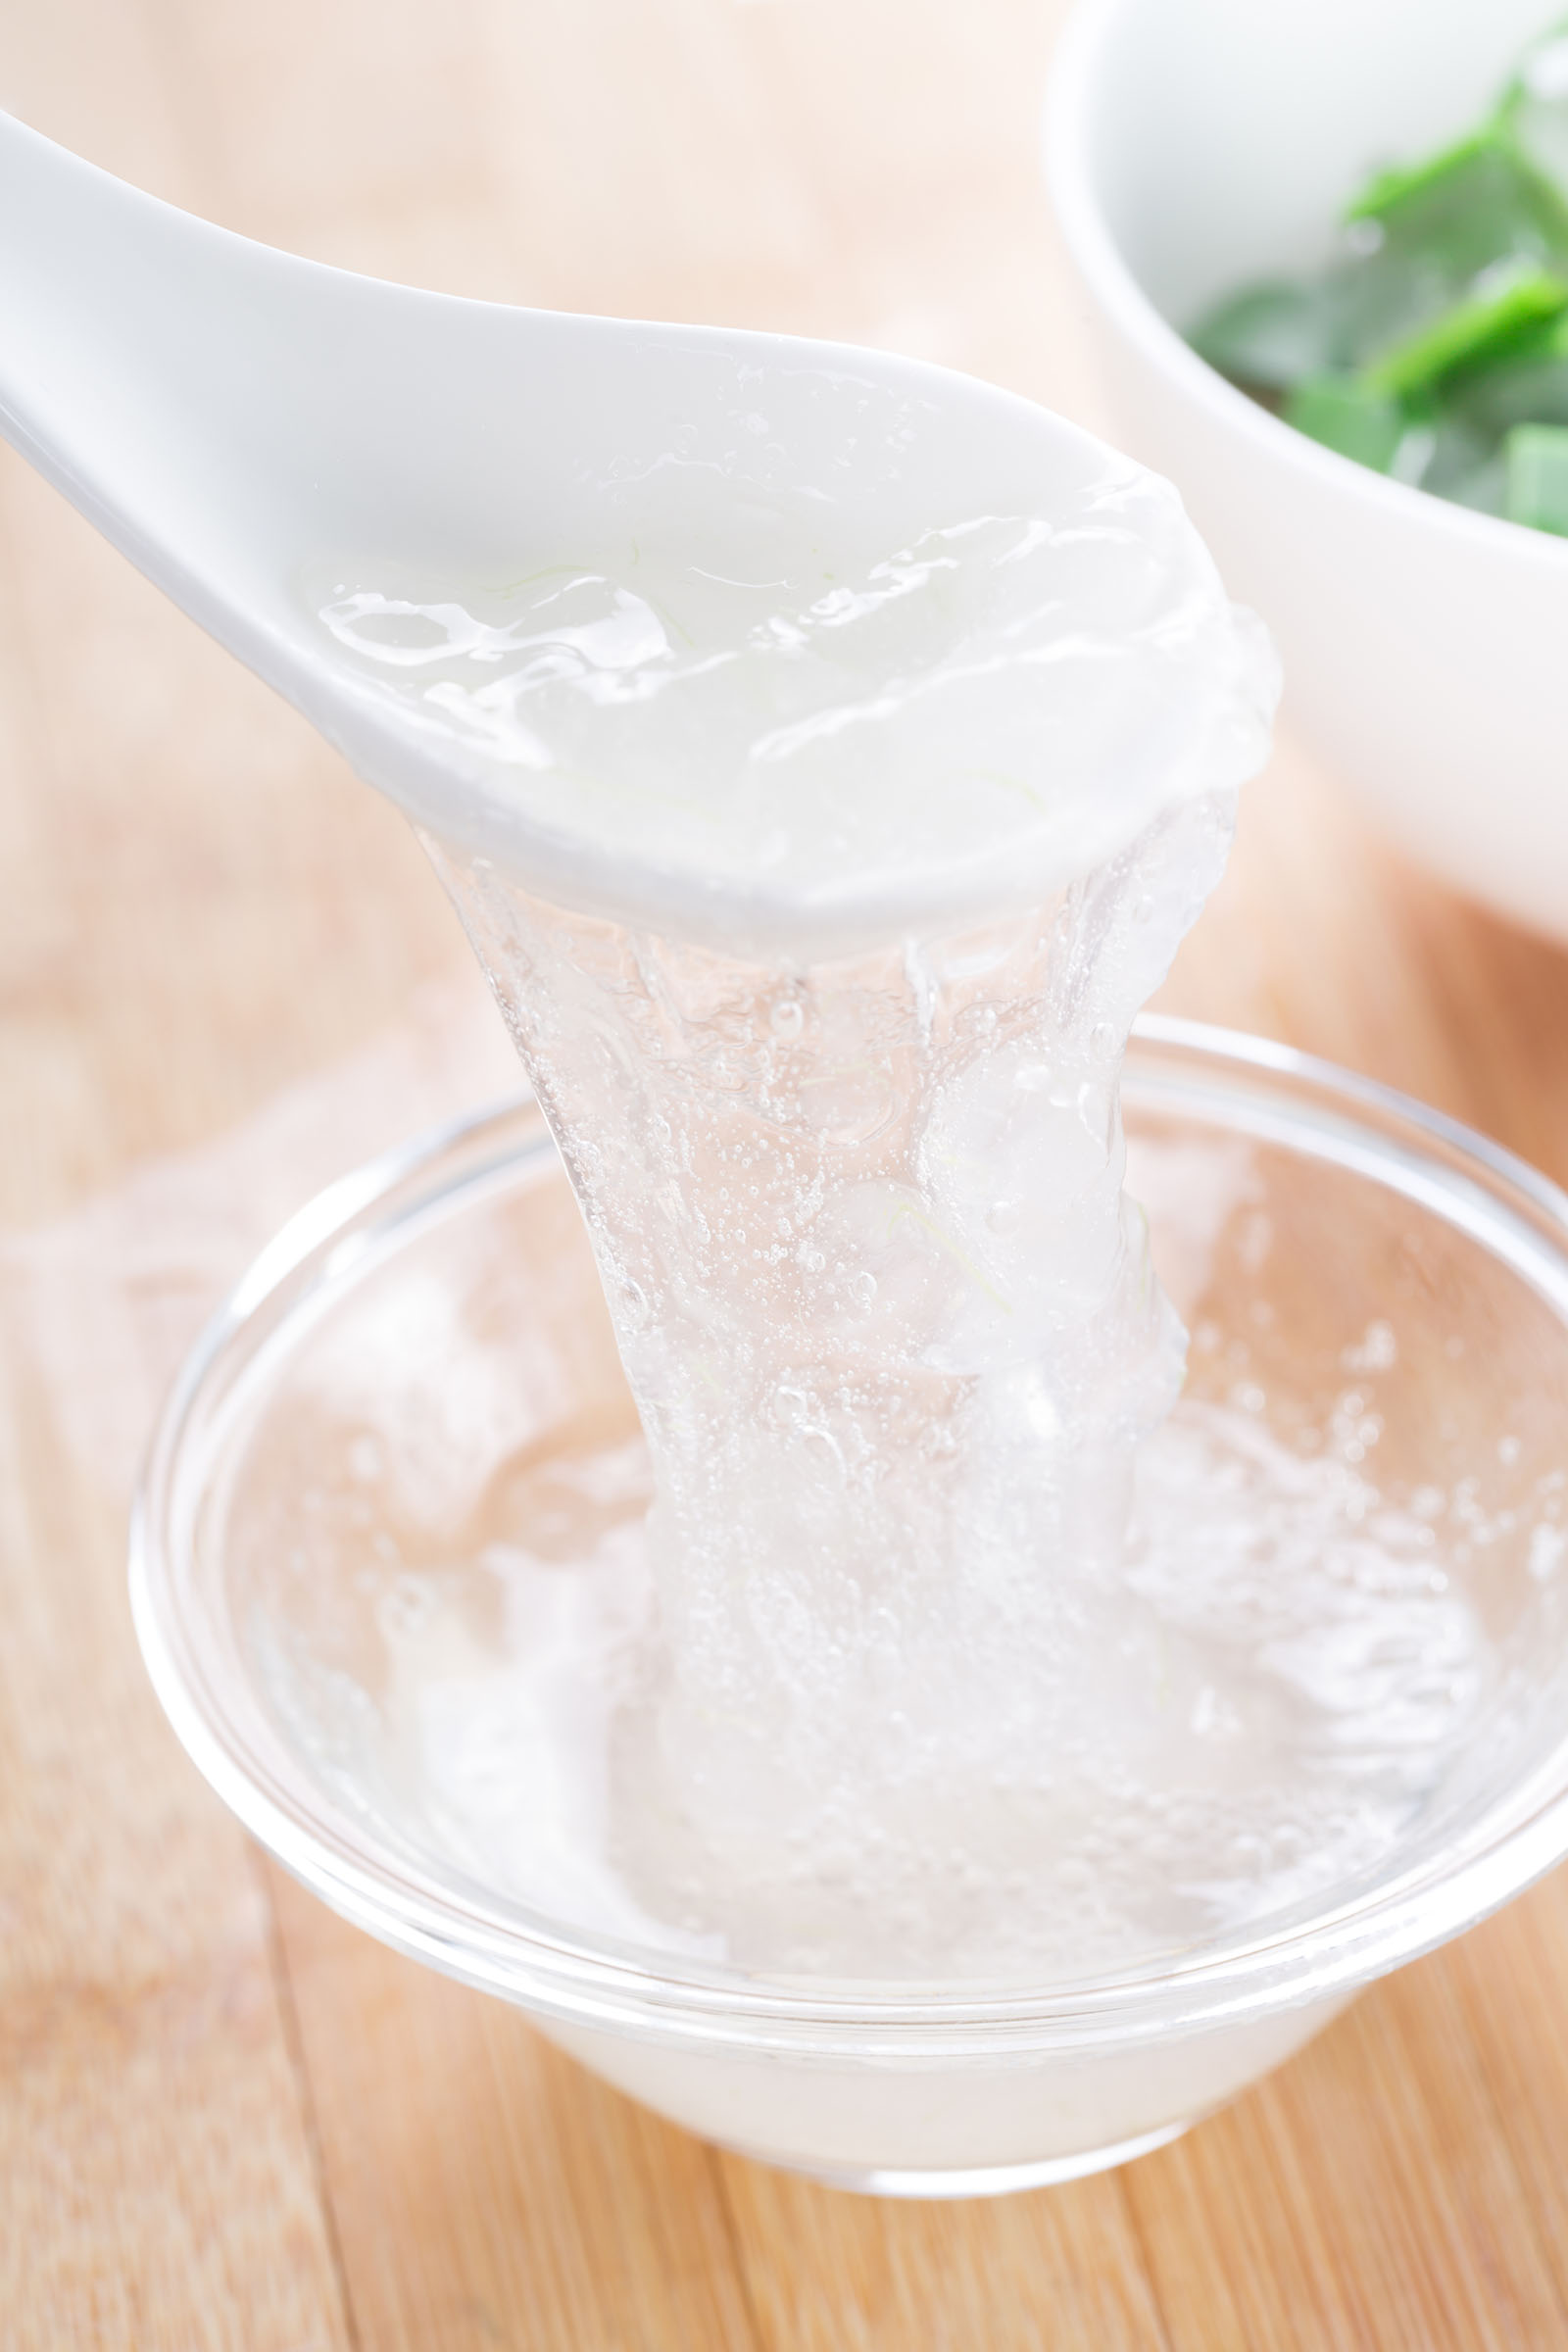 health benefits of aloe vera gel